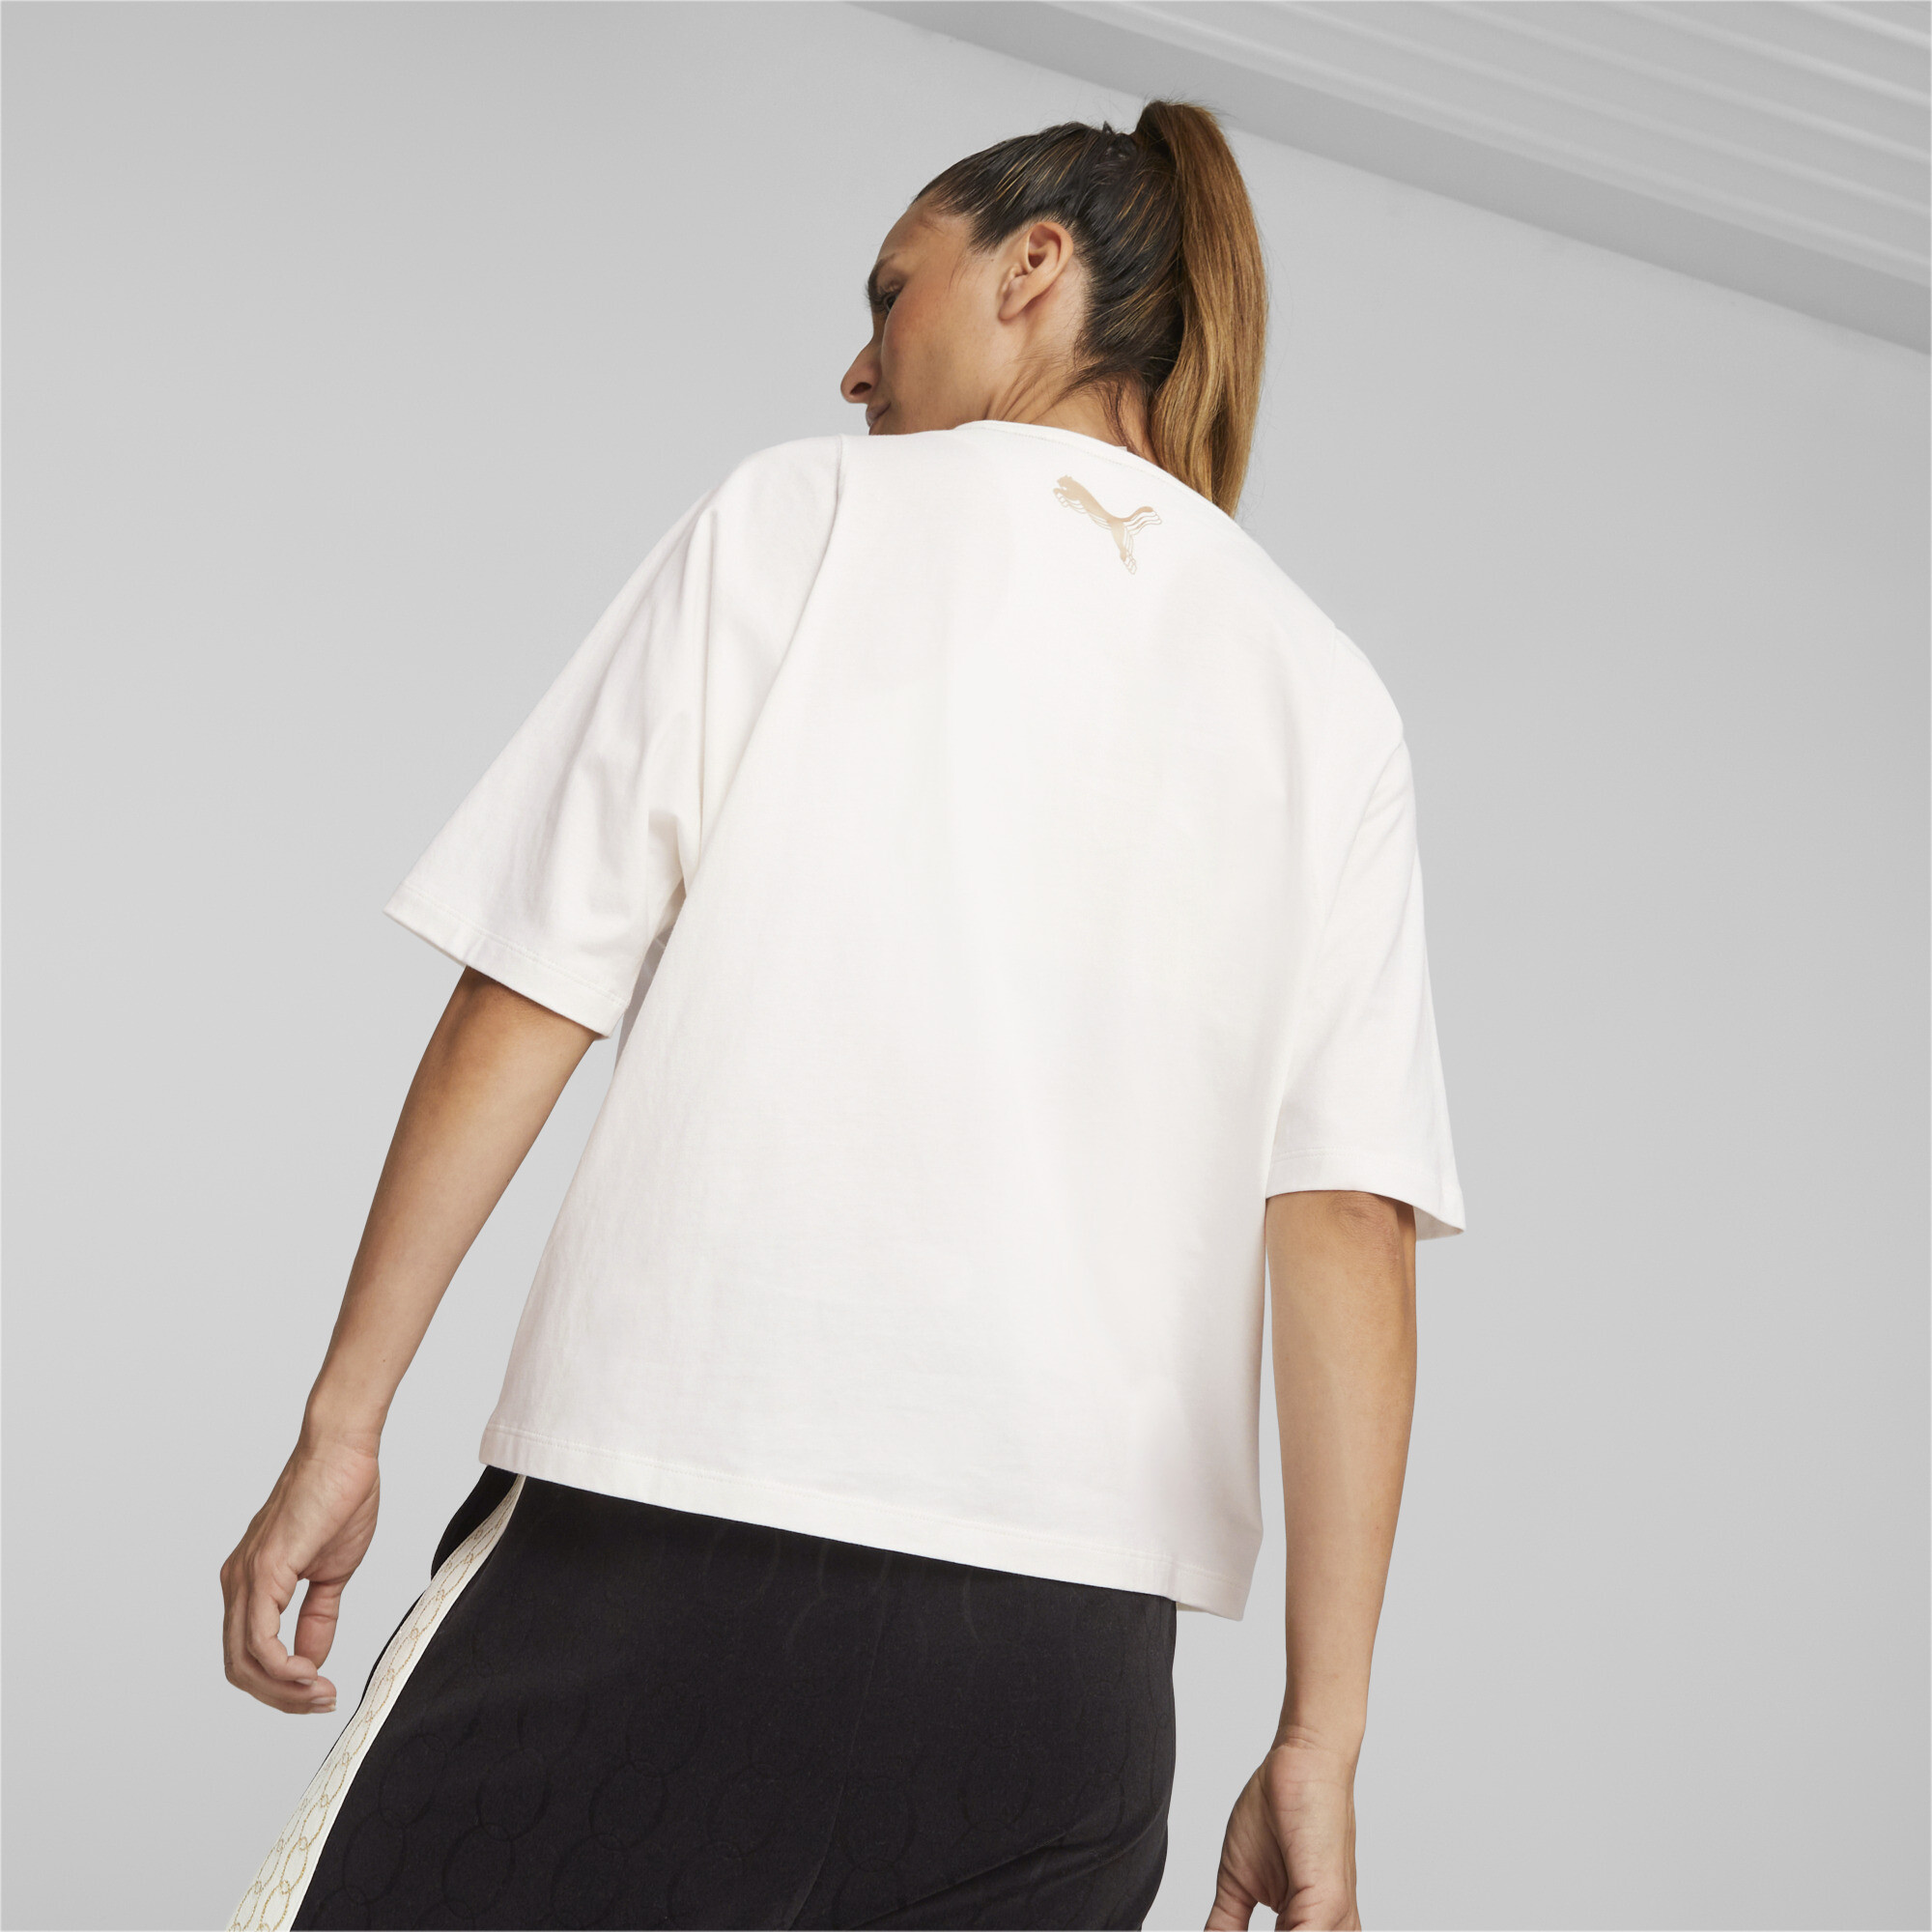 Women's Puma Gold Standard's Basketball T-Shirt, White, Size XS, Clothing